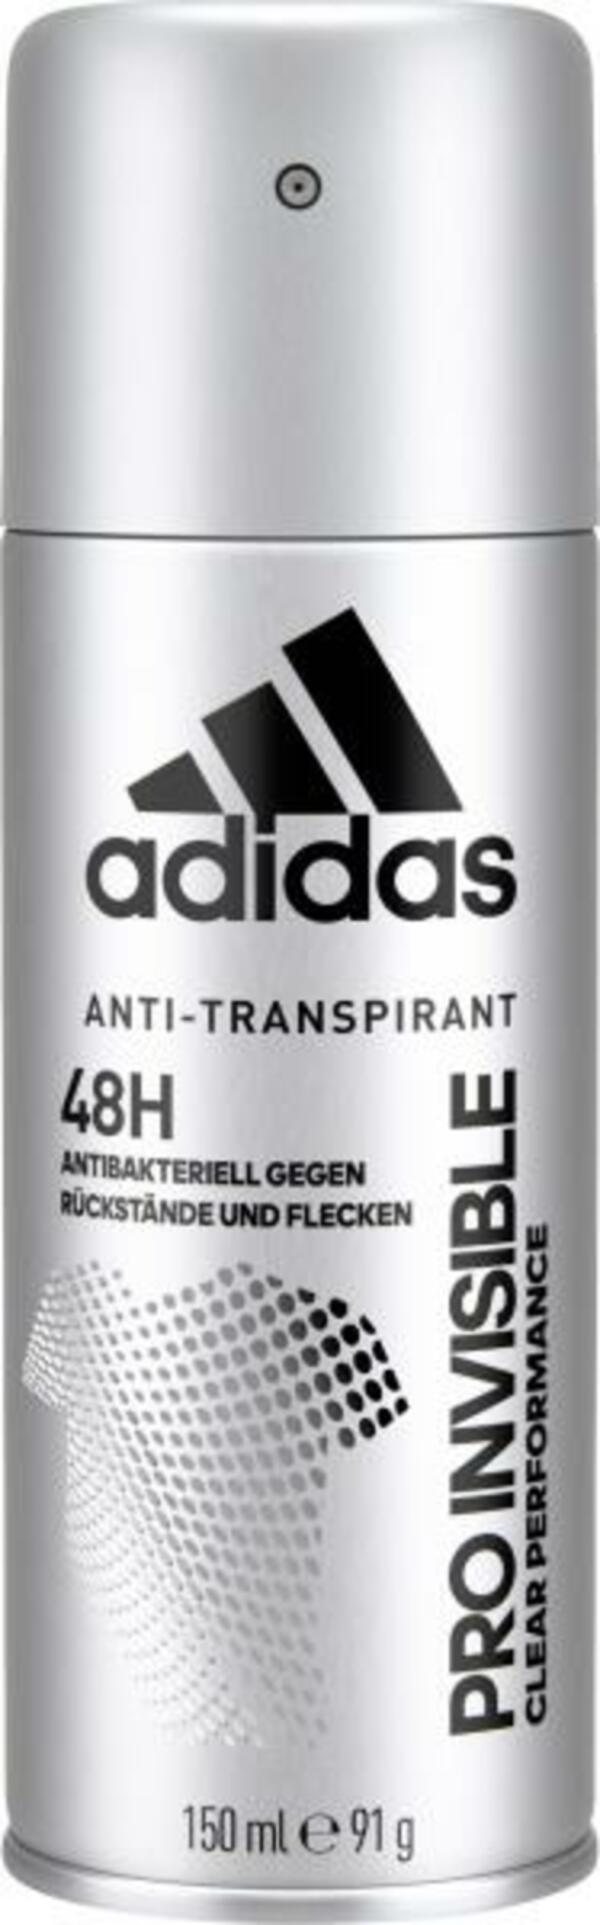 Bild 1 von Adidas Pro Invisible 48h Anti-Transpirant